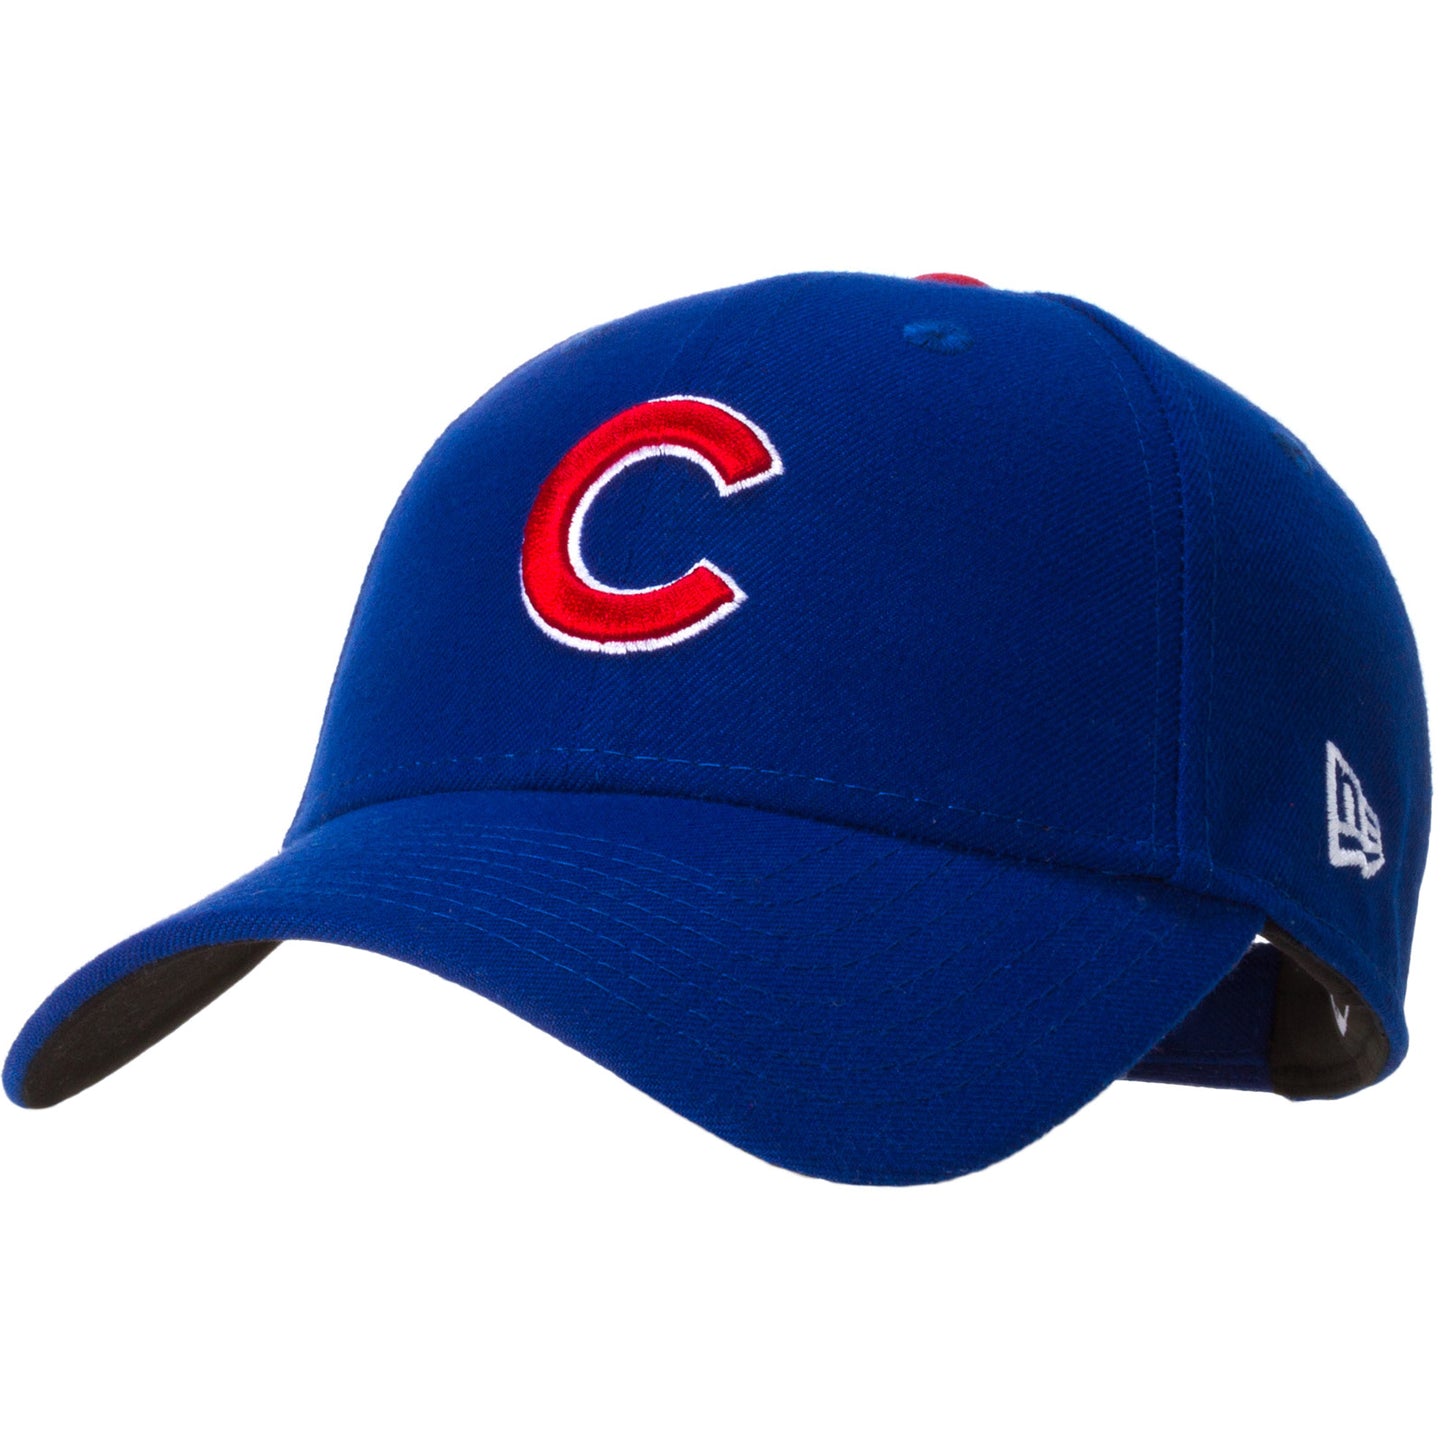 Chicago Cubs Adjustable Light Royal Hat with "C" Logo